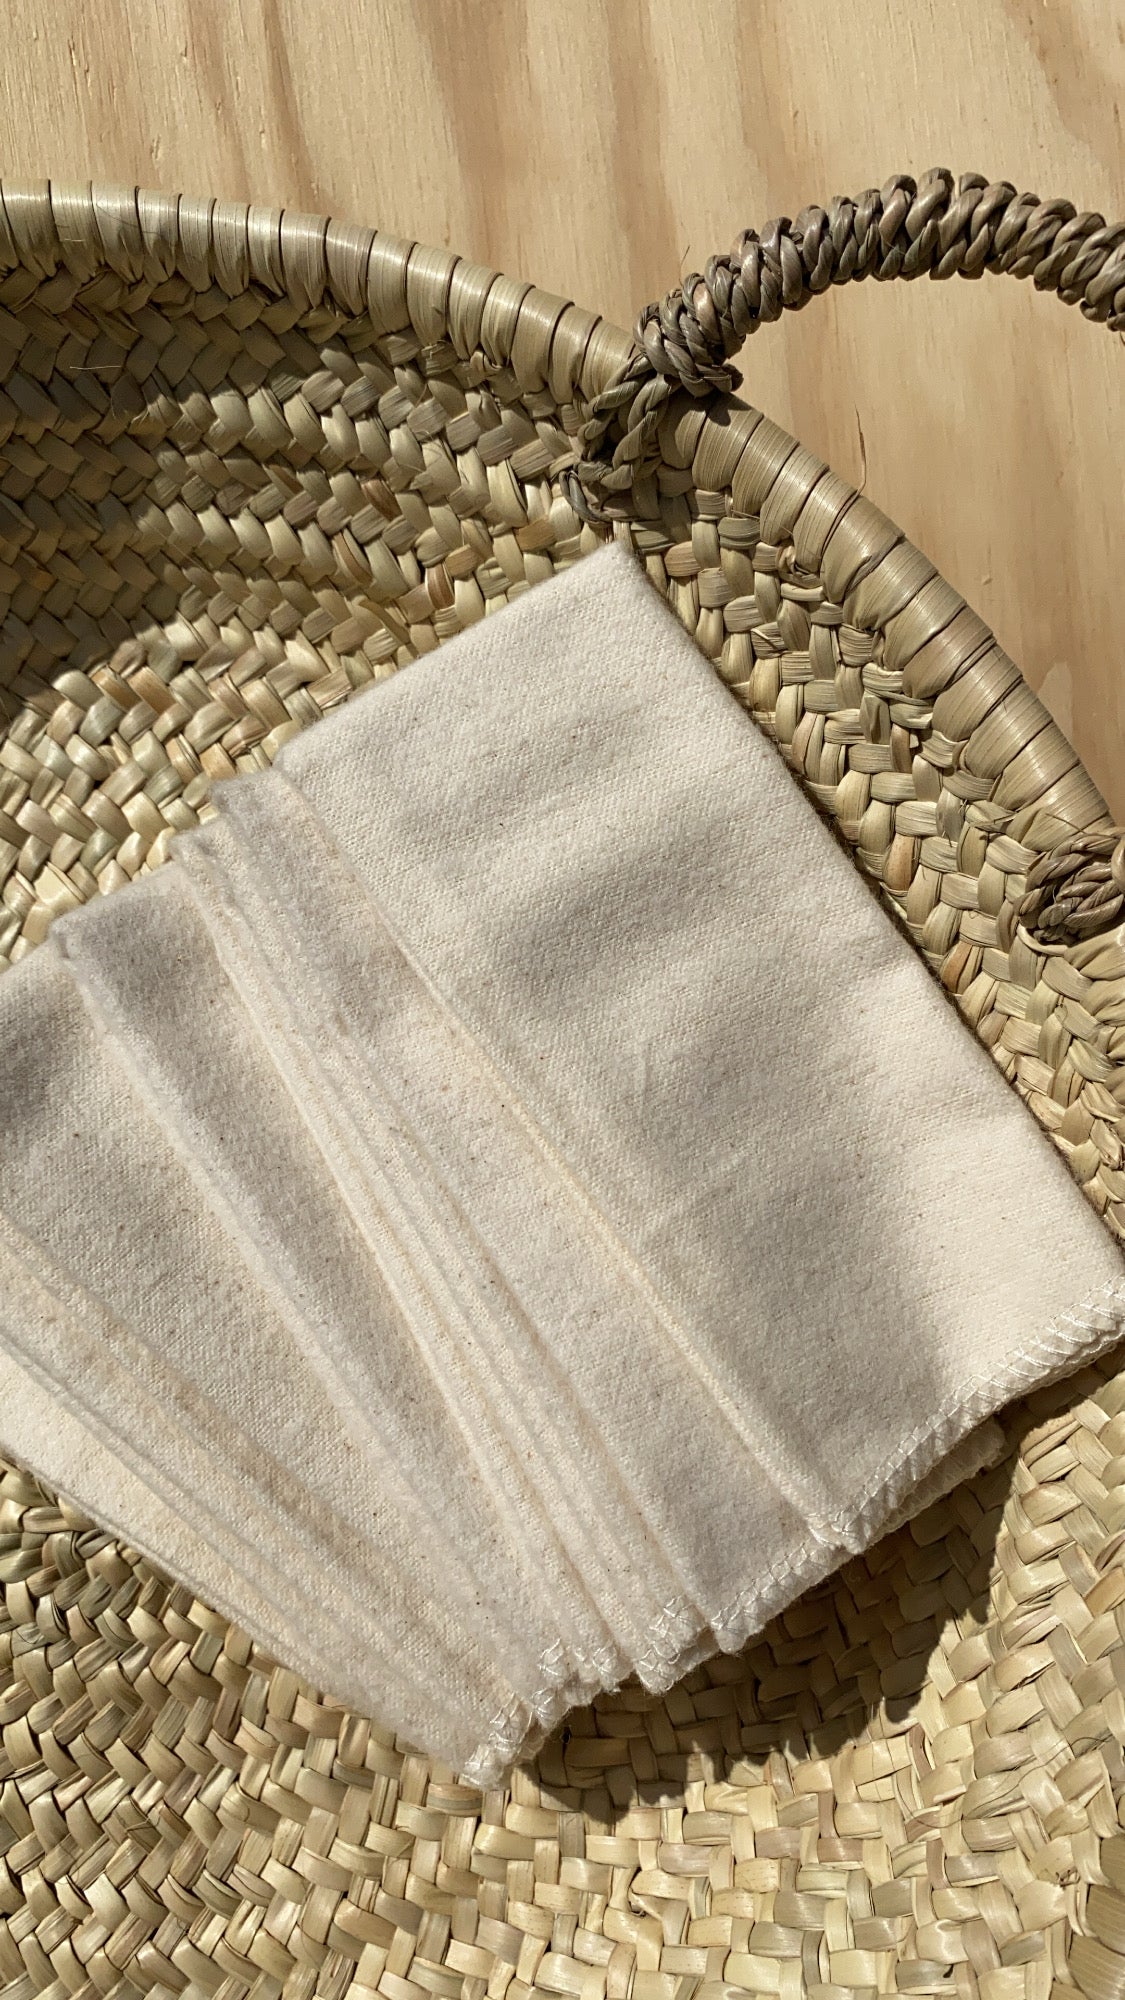 Single Ply Unpaper Towels | options